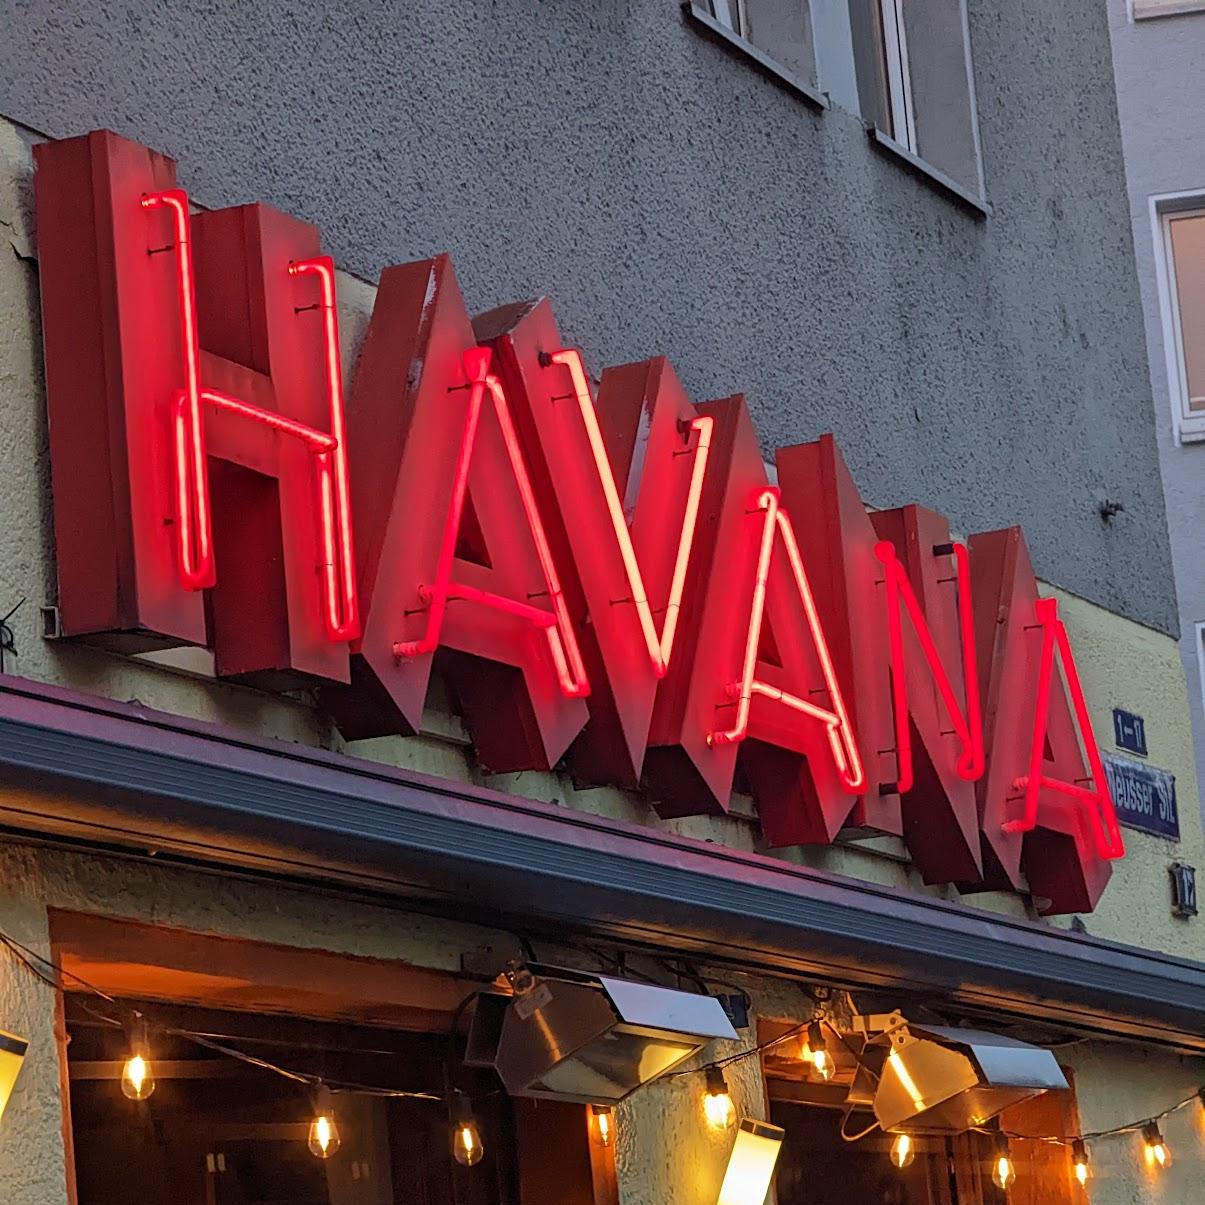 Restaurant "Havana" in Köln